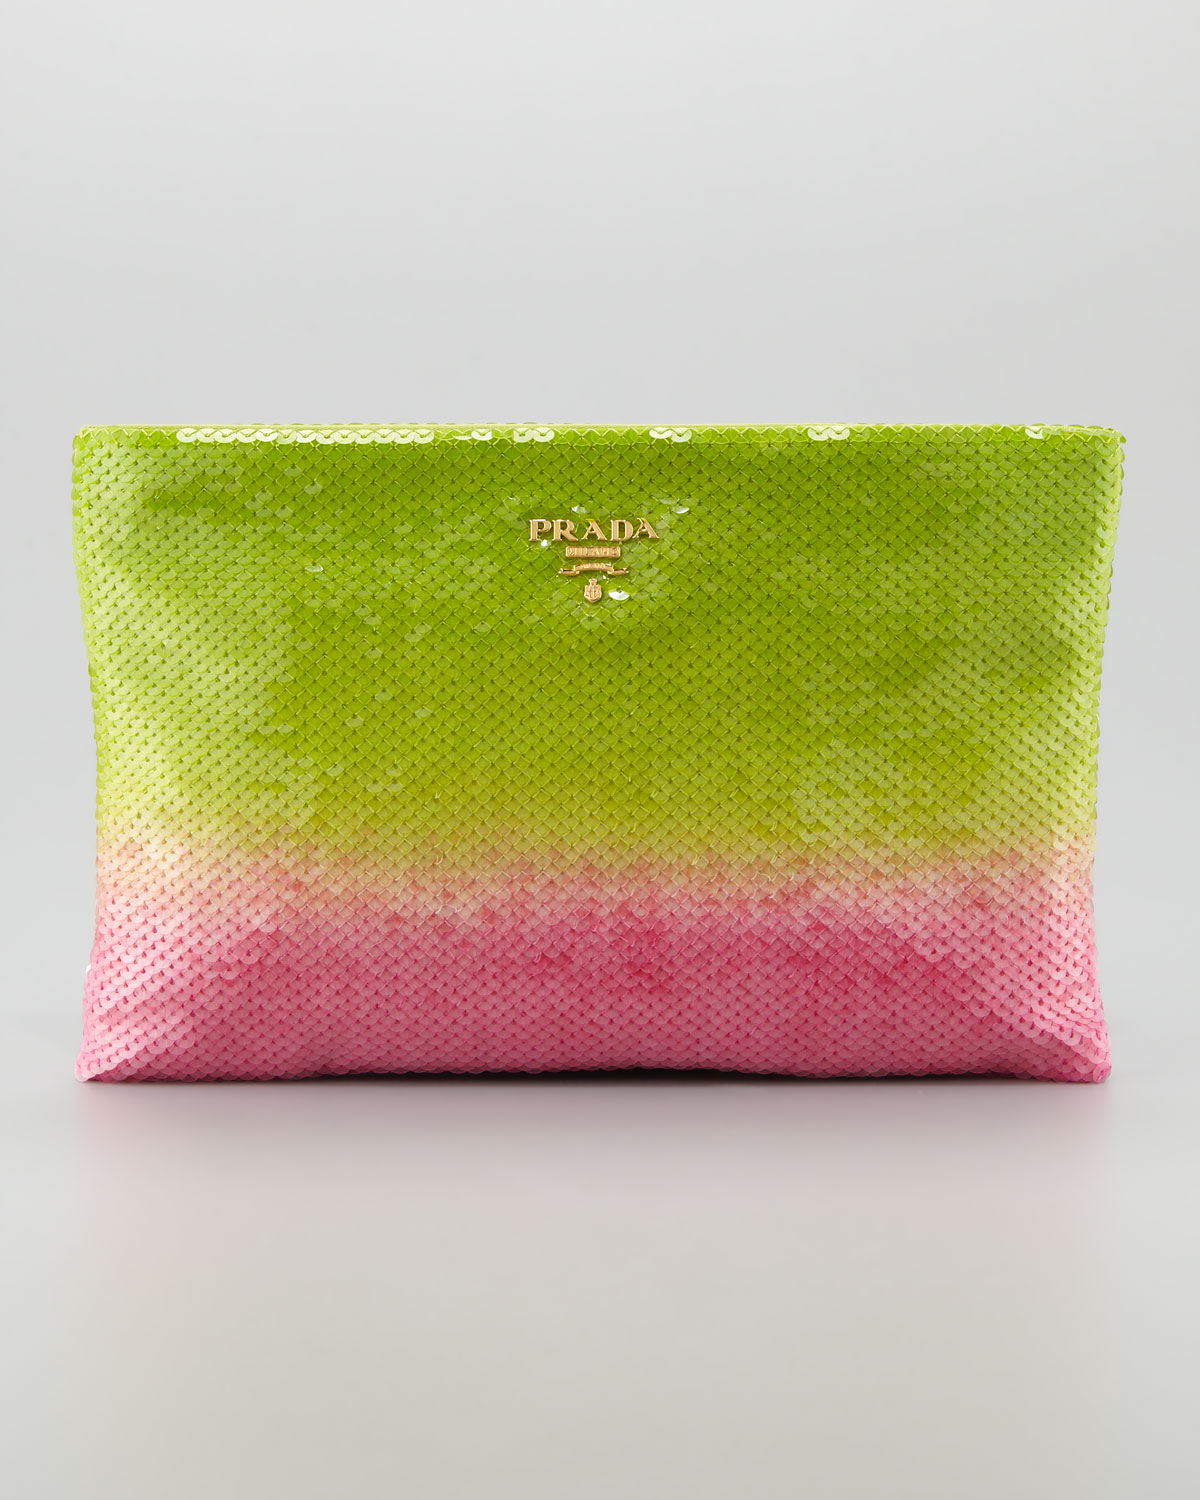 prada nylon handbag - Prada Degrade Sequin Pouch Clutch Bag in Pink (green pink) | Lyst